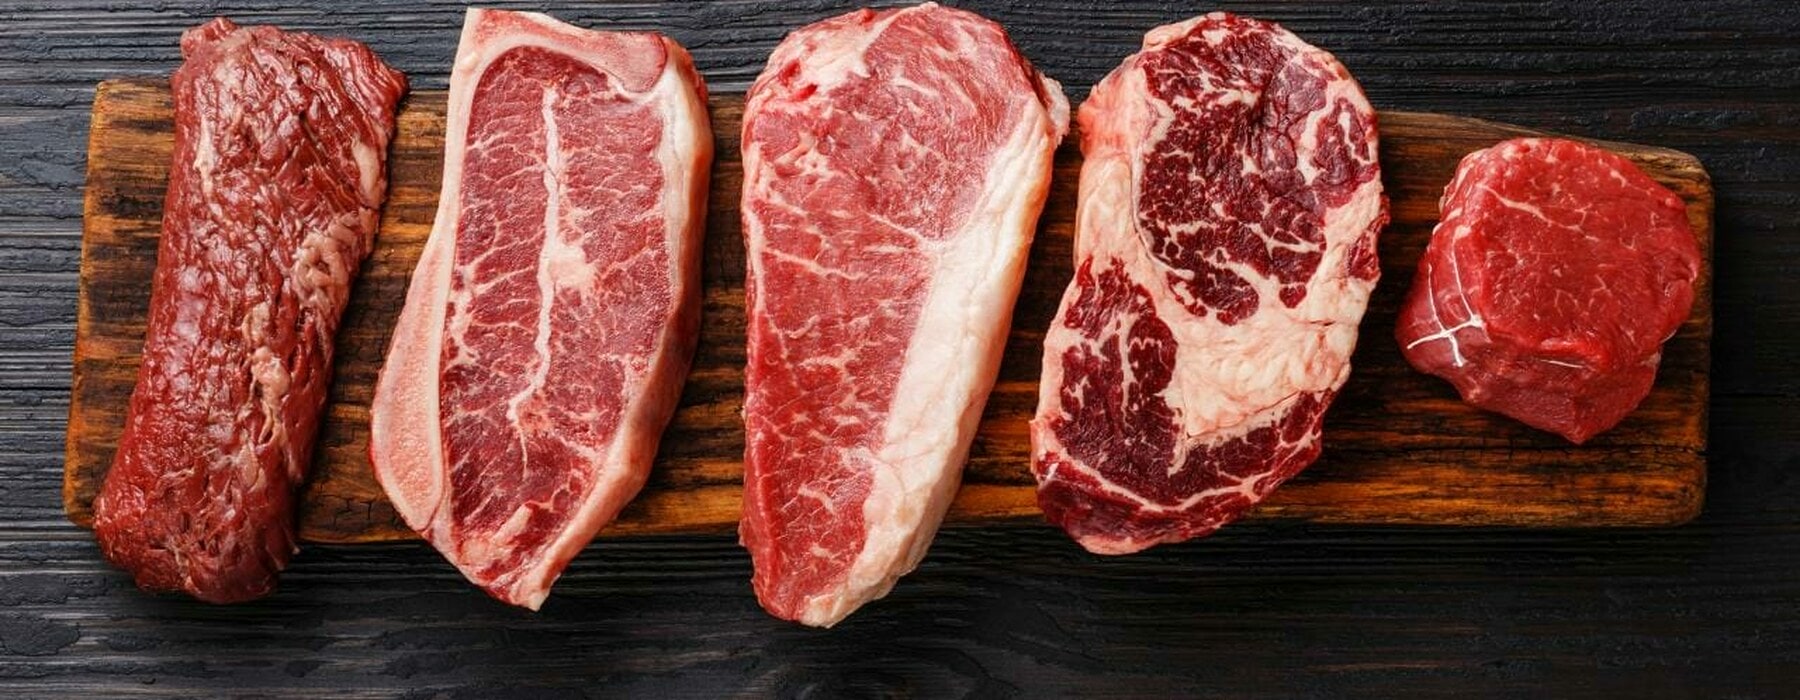 Best Cuts of Steak Explained | Woman+